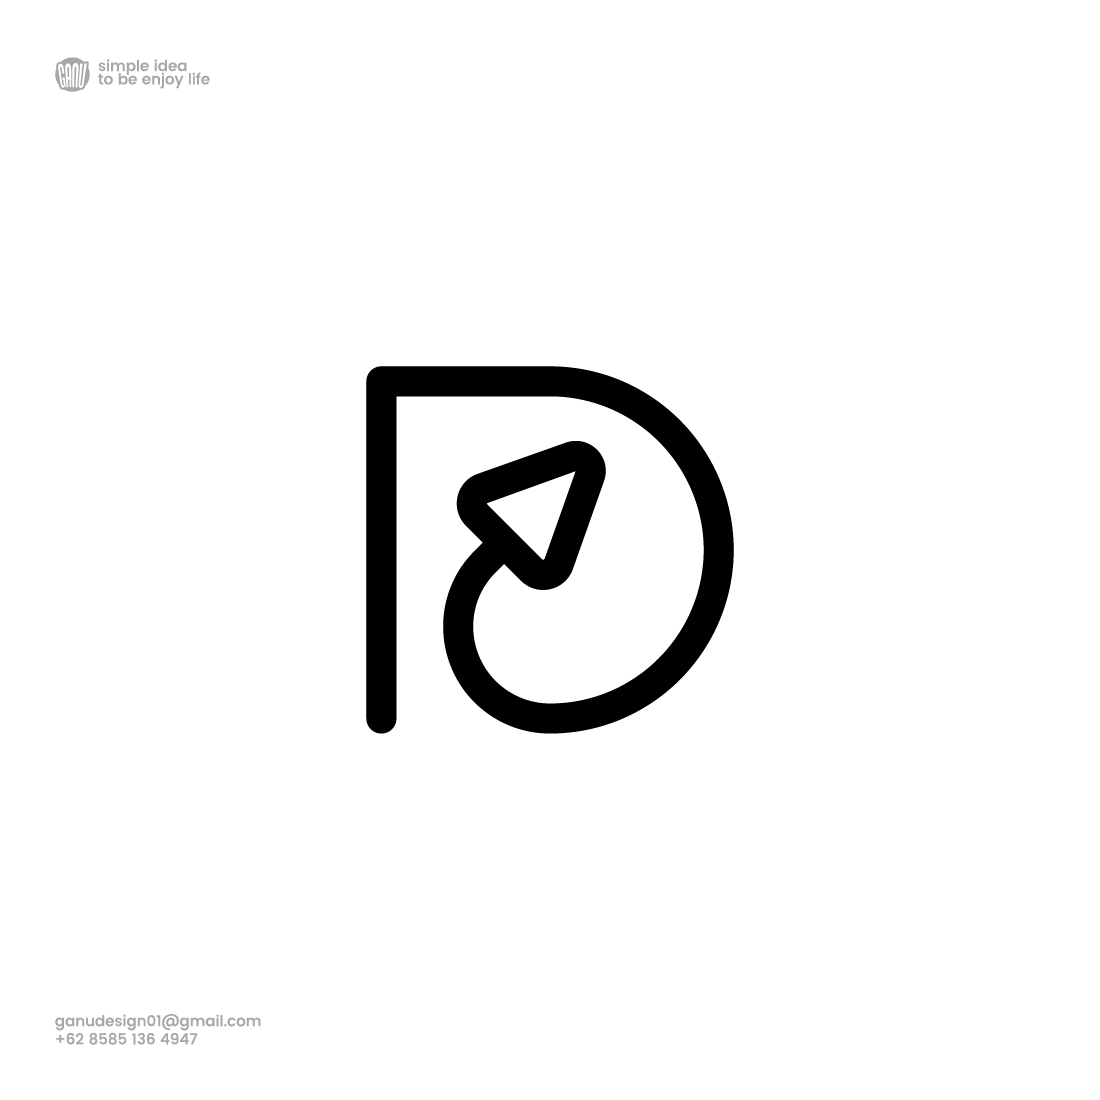 Minimalist D letter logo with Arrow design preview image.